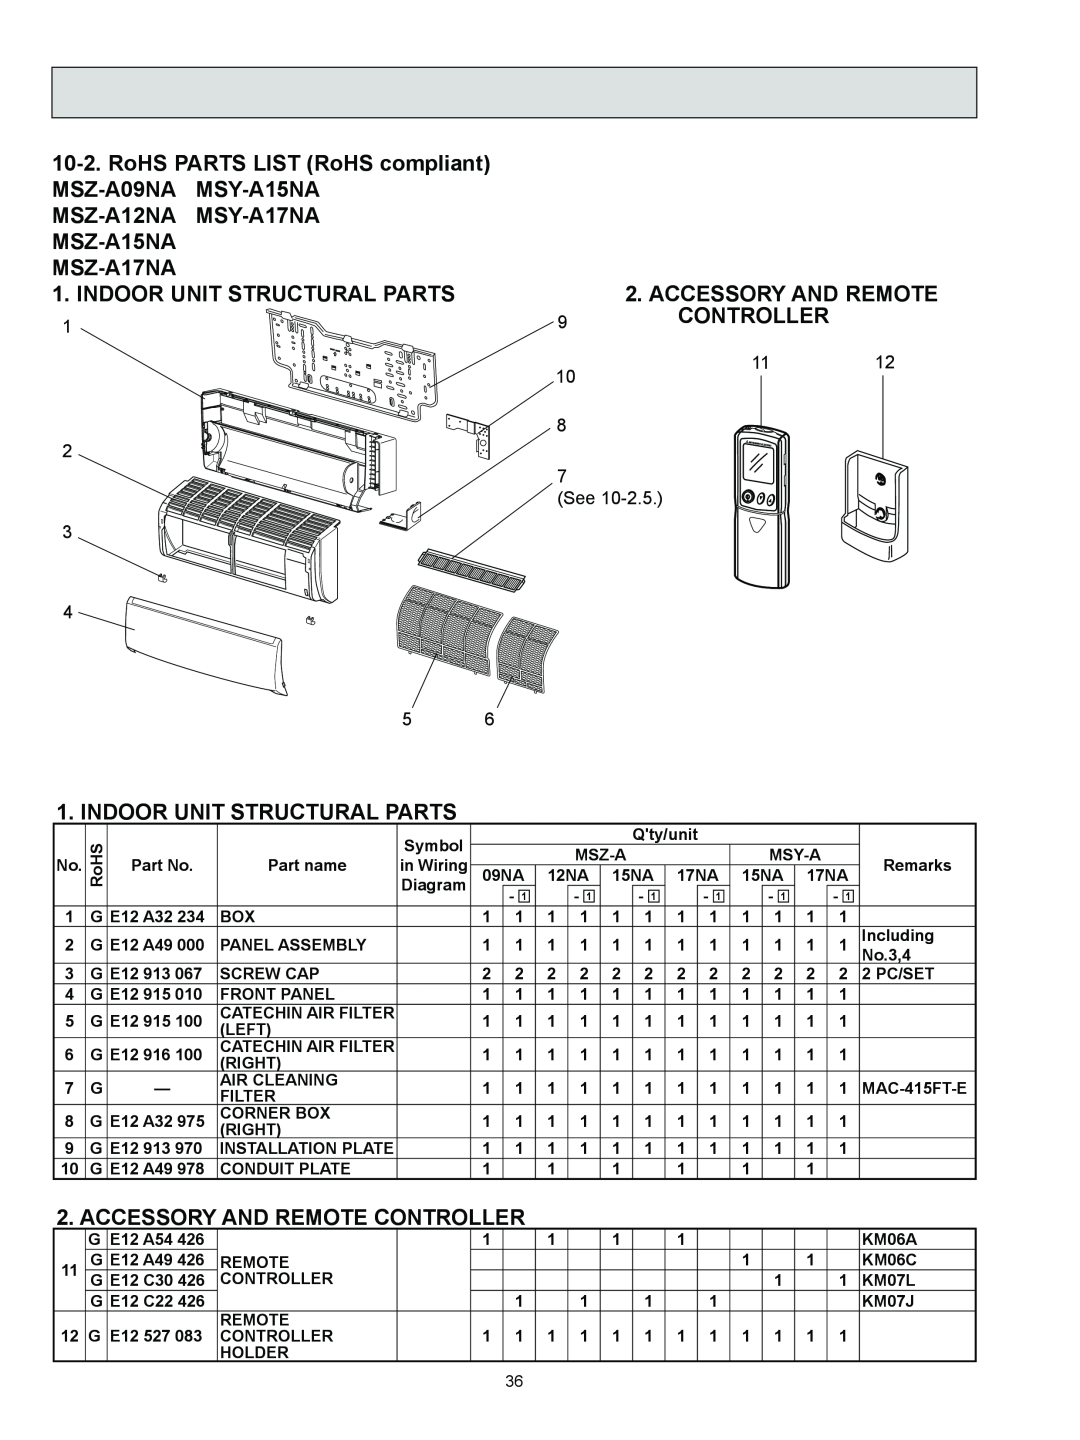 Logitech OB450 REVISED EDITION-B, MSZ-A09NA Indoor Unit Structural Parts, MSZ-A17NA 1. INDOOR UNIT STRUCTURAL PARTS, 1112 